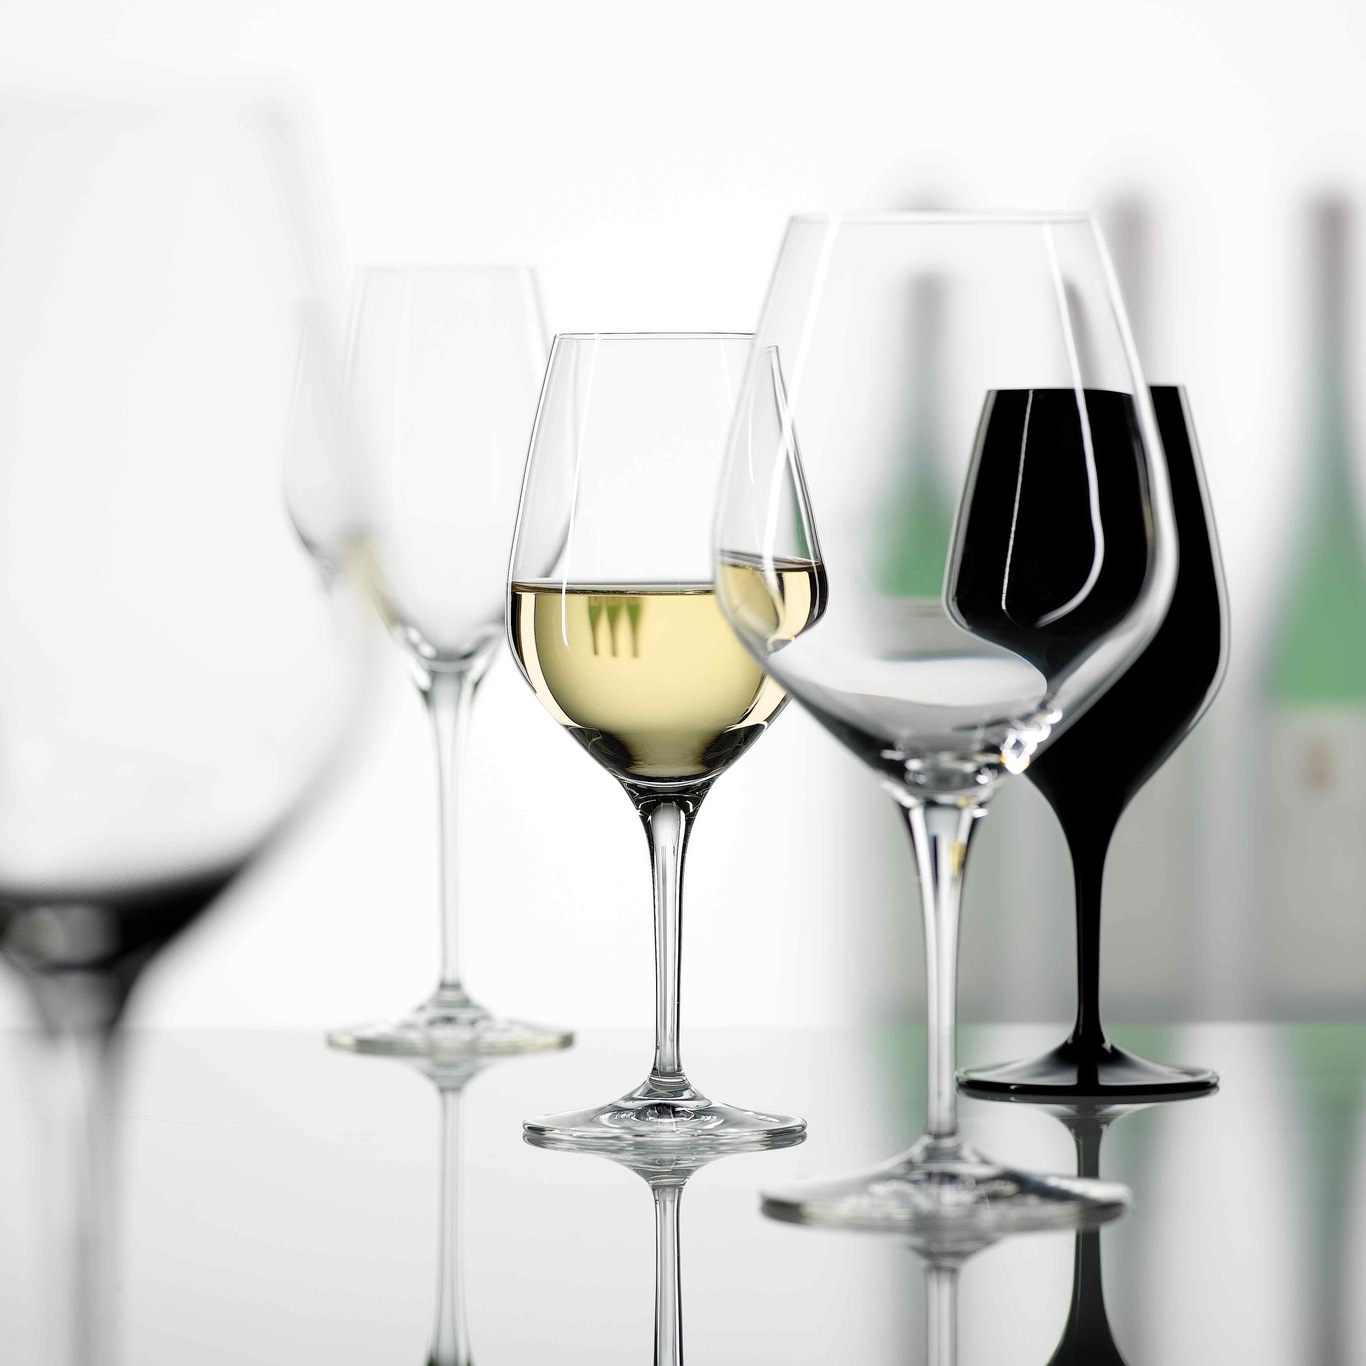 https://royaldesign.com/image/2/spiegelau-authentis-red-wine-glass-set-of-4-48-cl-2?w=800&quality=80